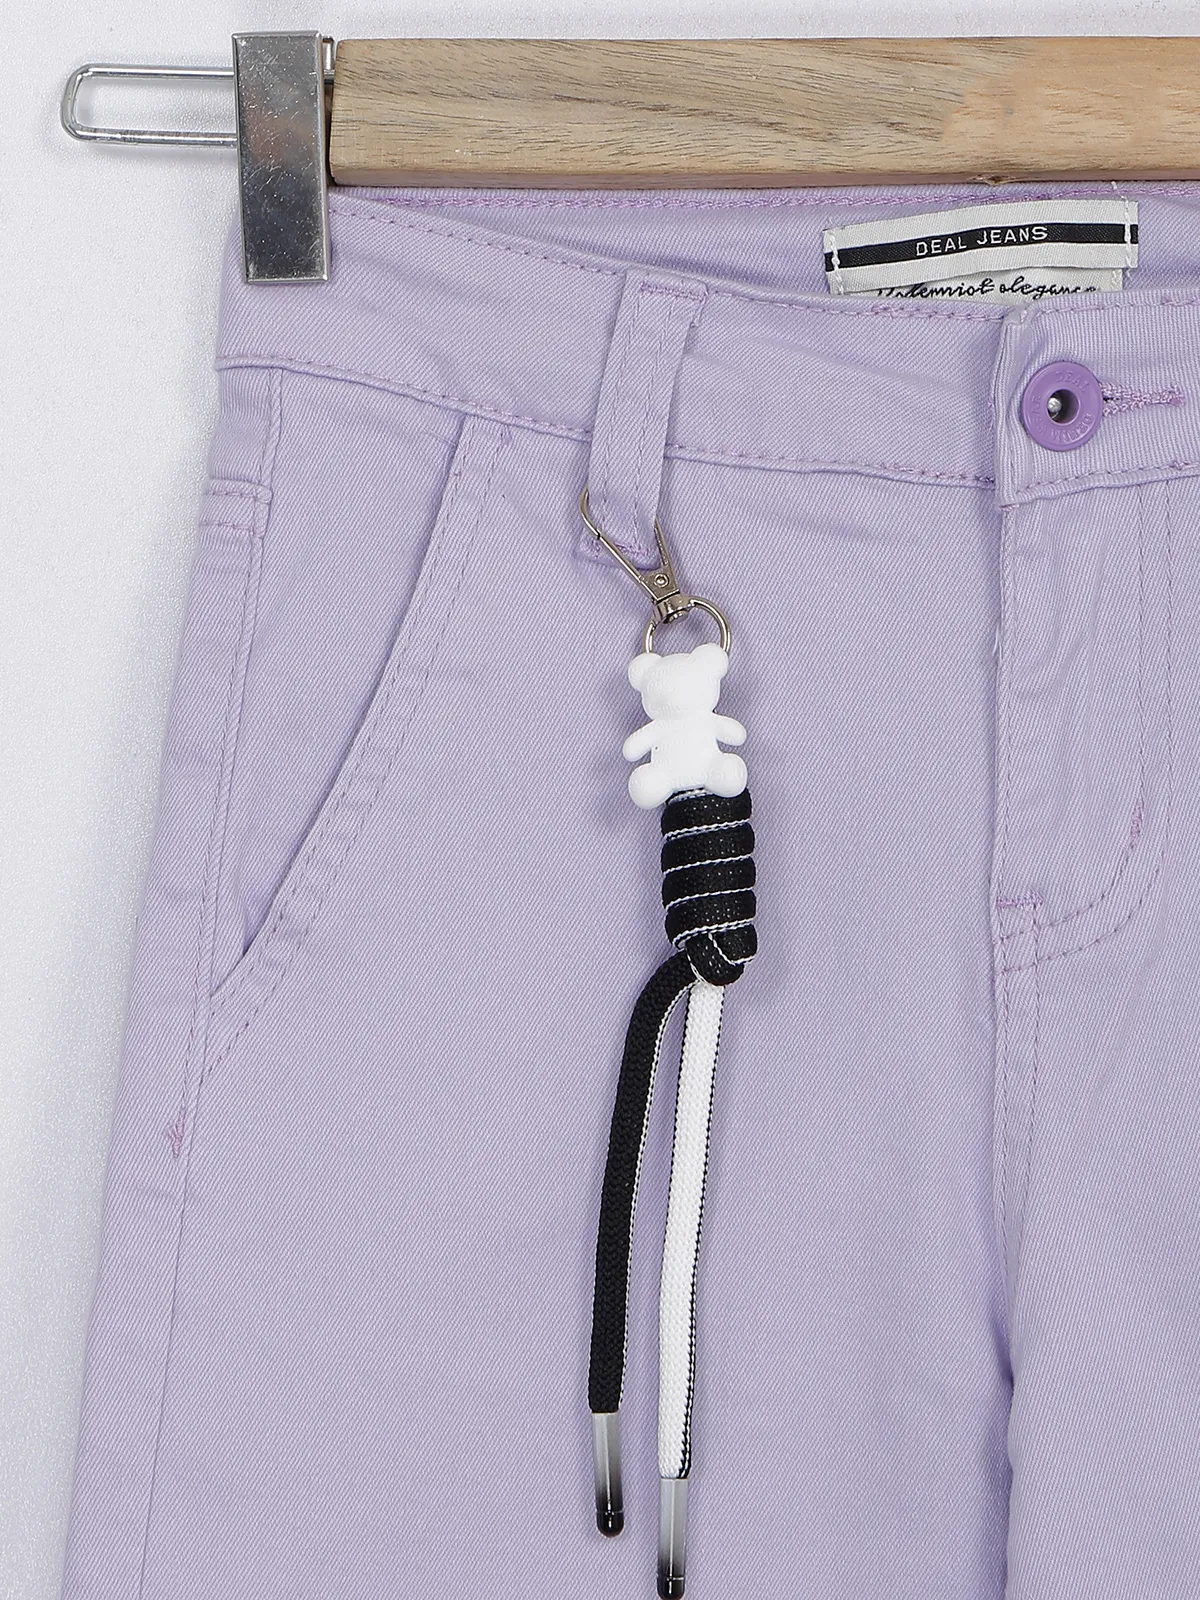 Deal wide leg lilac purple solid jeans